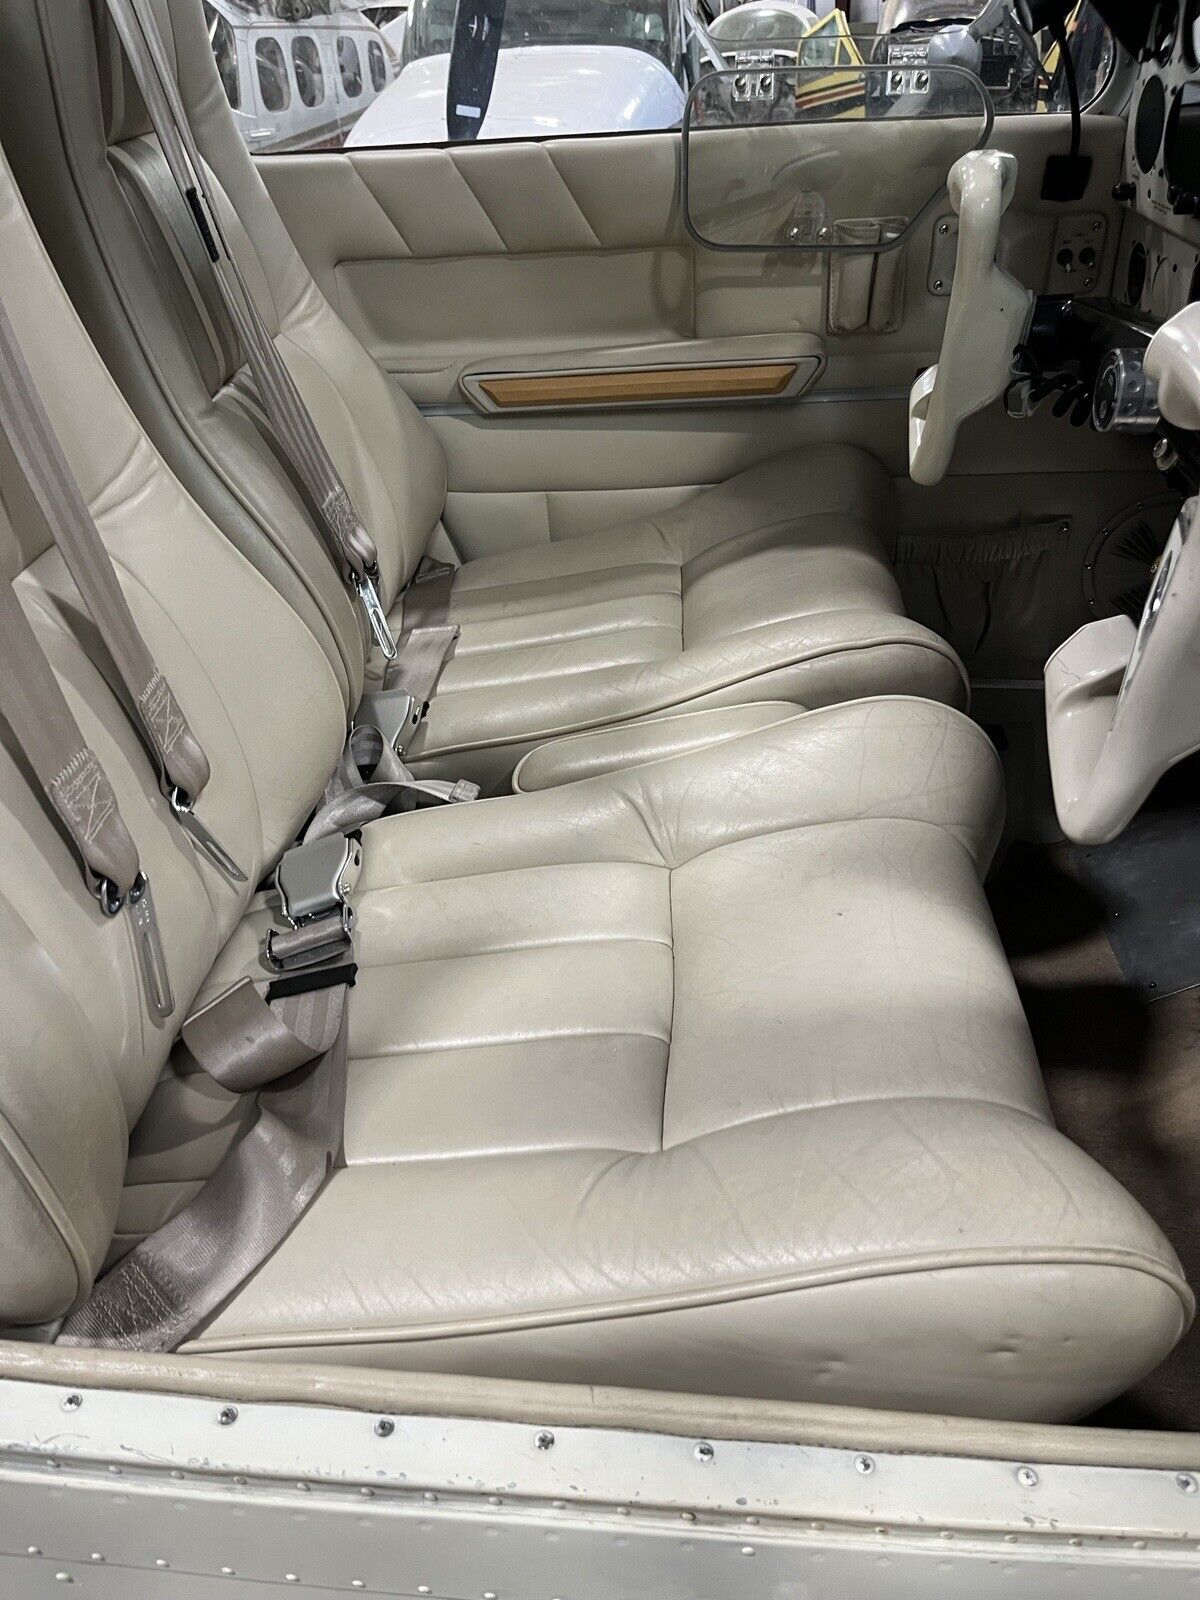 1965 Beechcraft S35 Bonanza Leather Interior Beige Seats 1-4 W/ Plastics/Panels